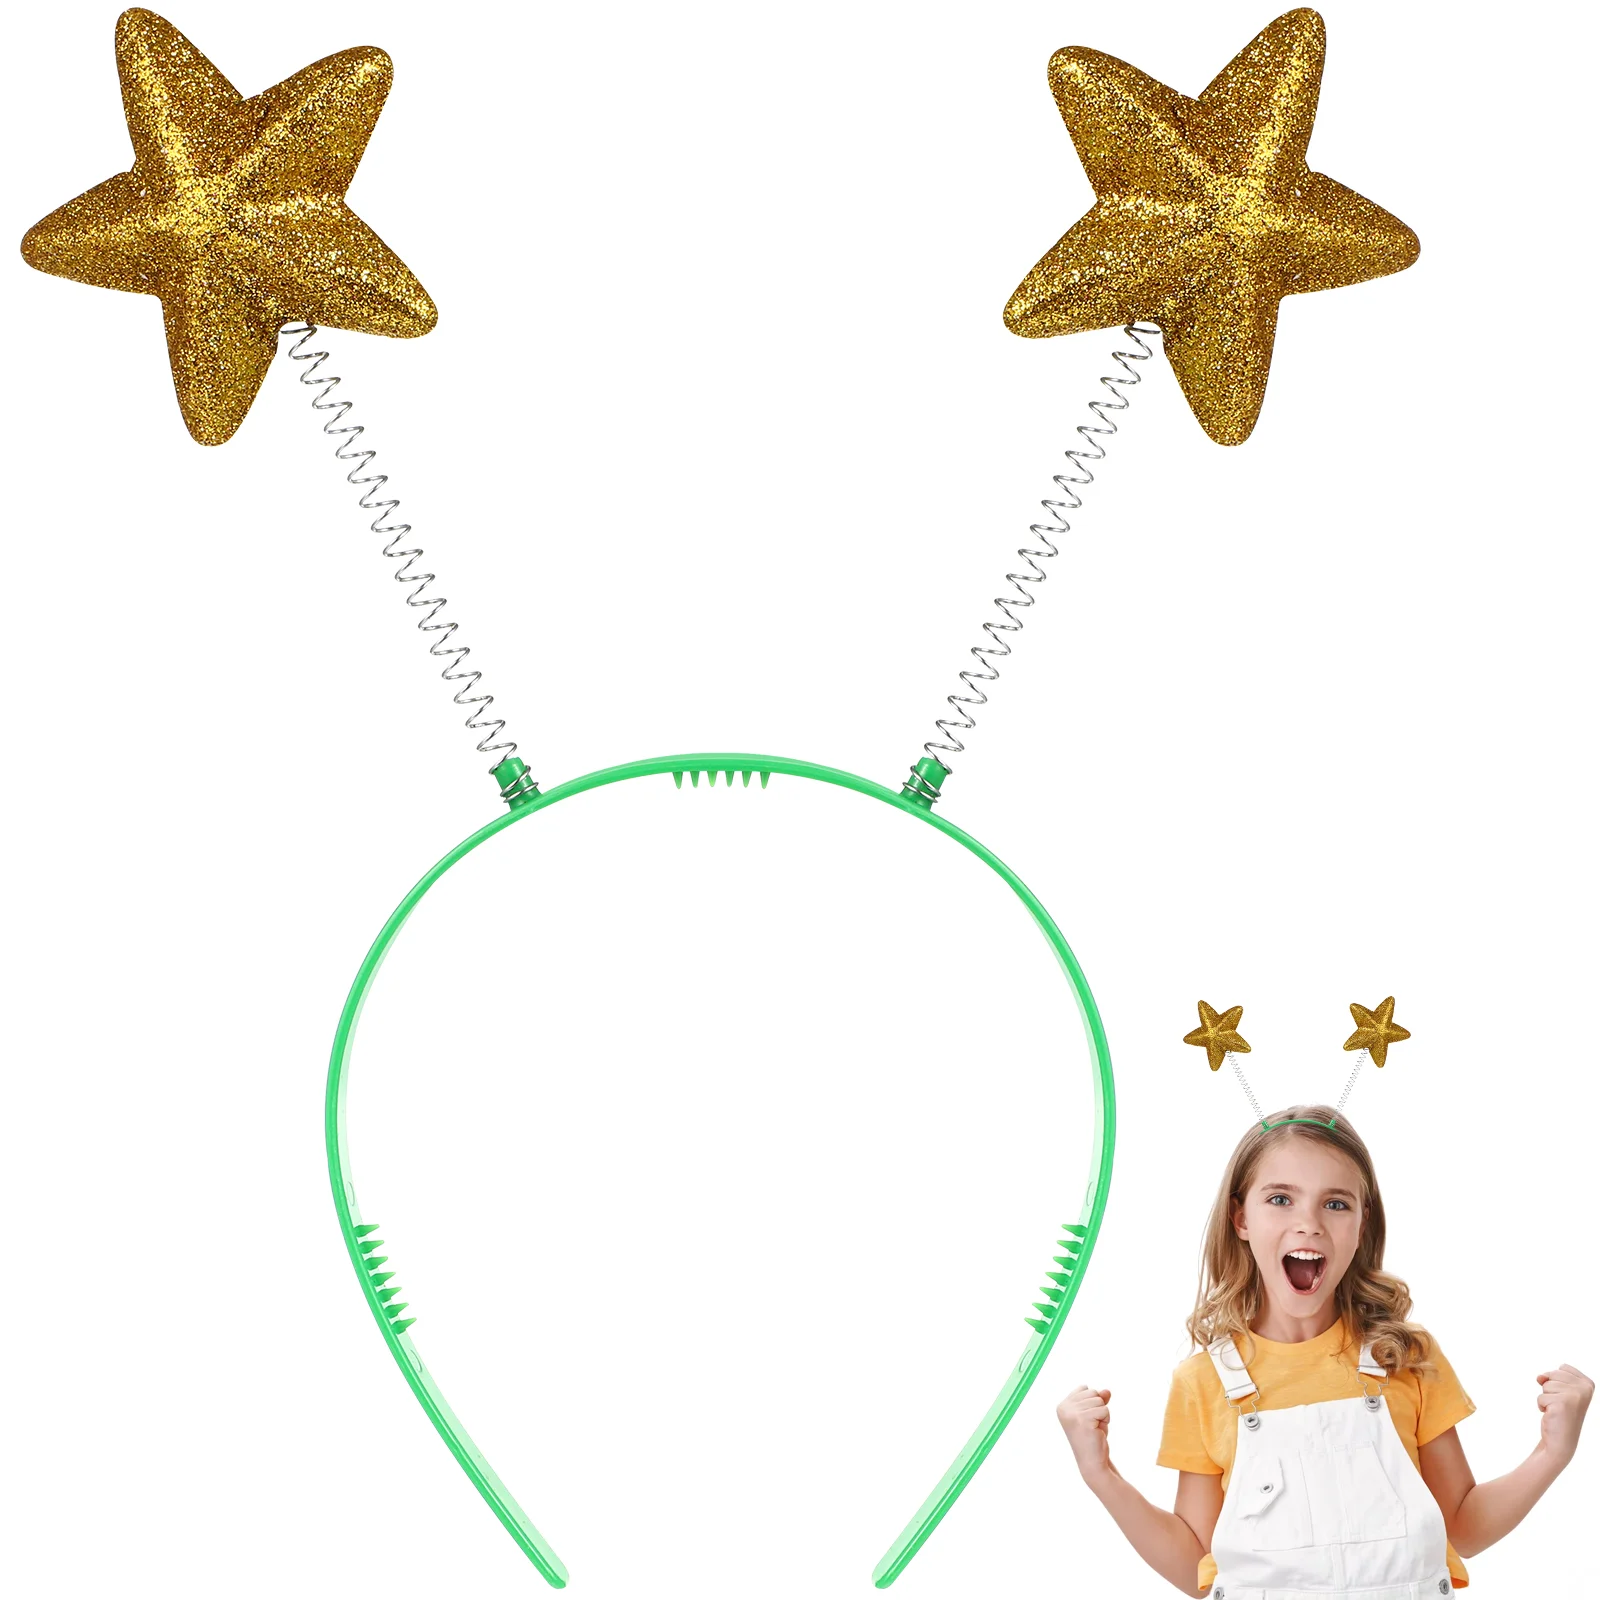 

8 Pcs Pentagram Girls Accessories Sequined Star Headwear Party Headdress Antenna Cosplay Plastic